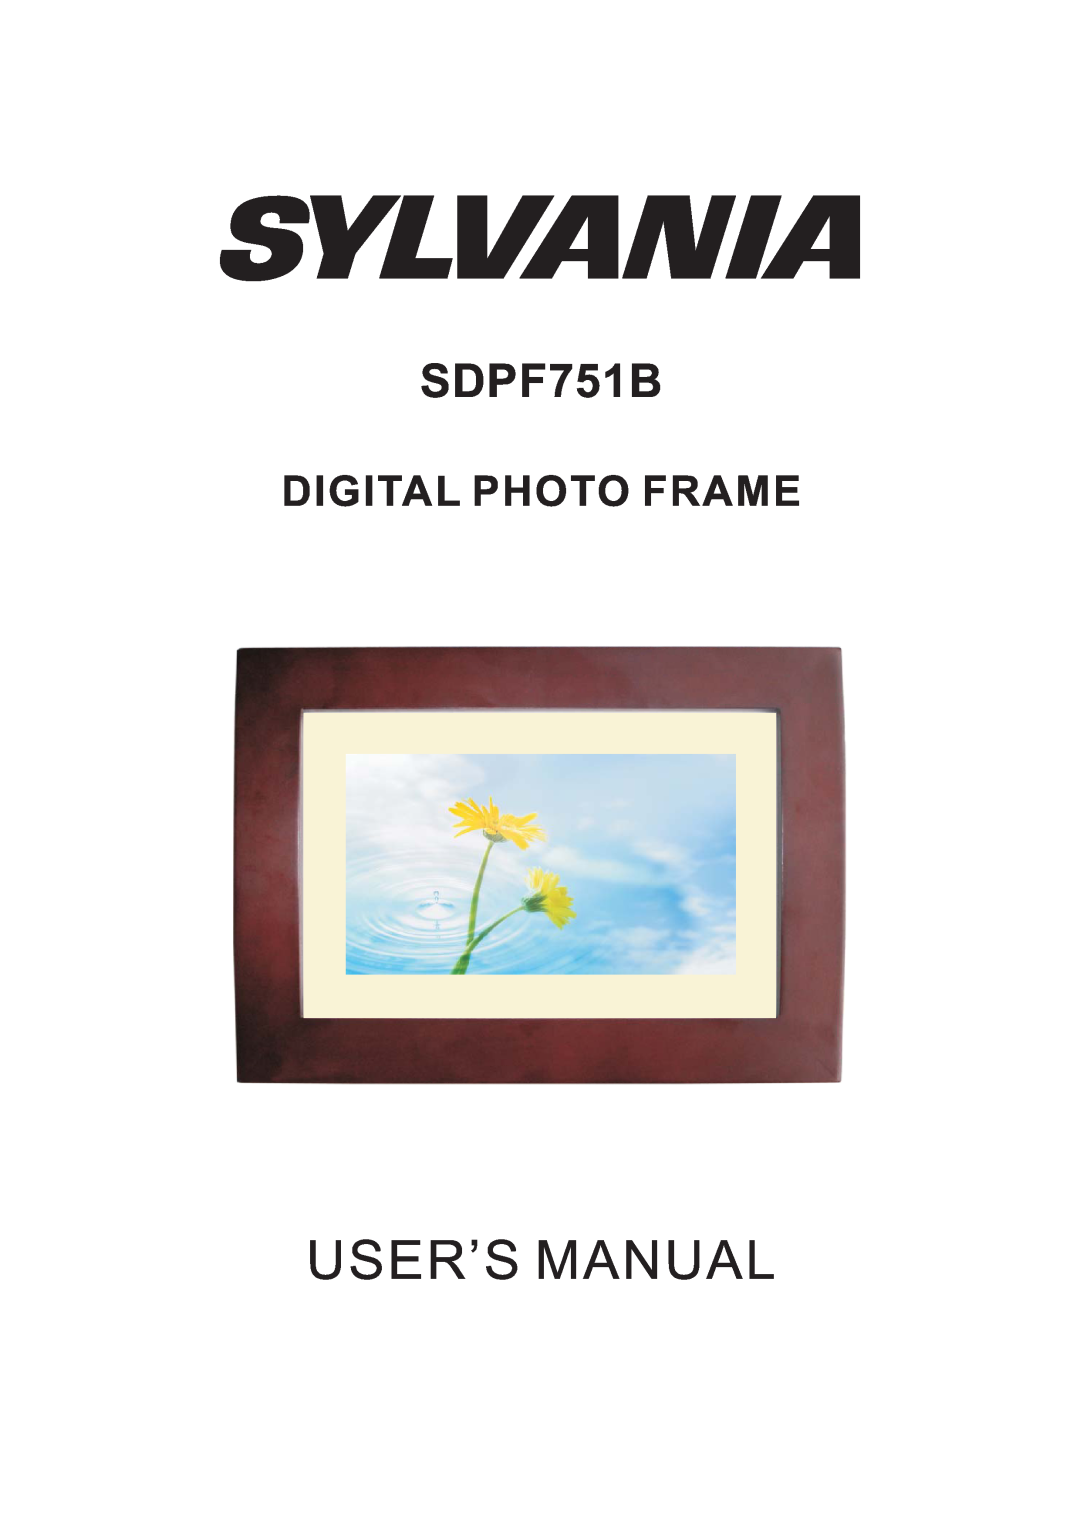 Sylvania SDPF751B user manual User’S Manual, Digital Photo Frame 